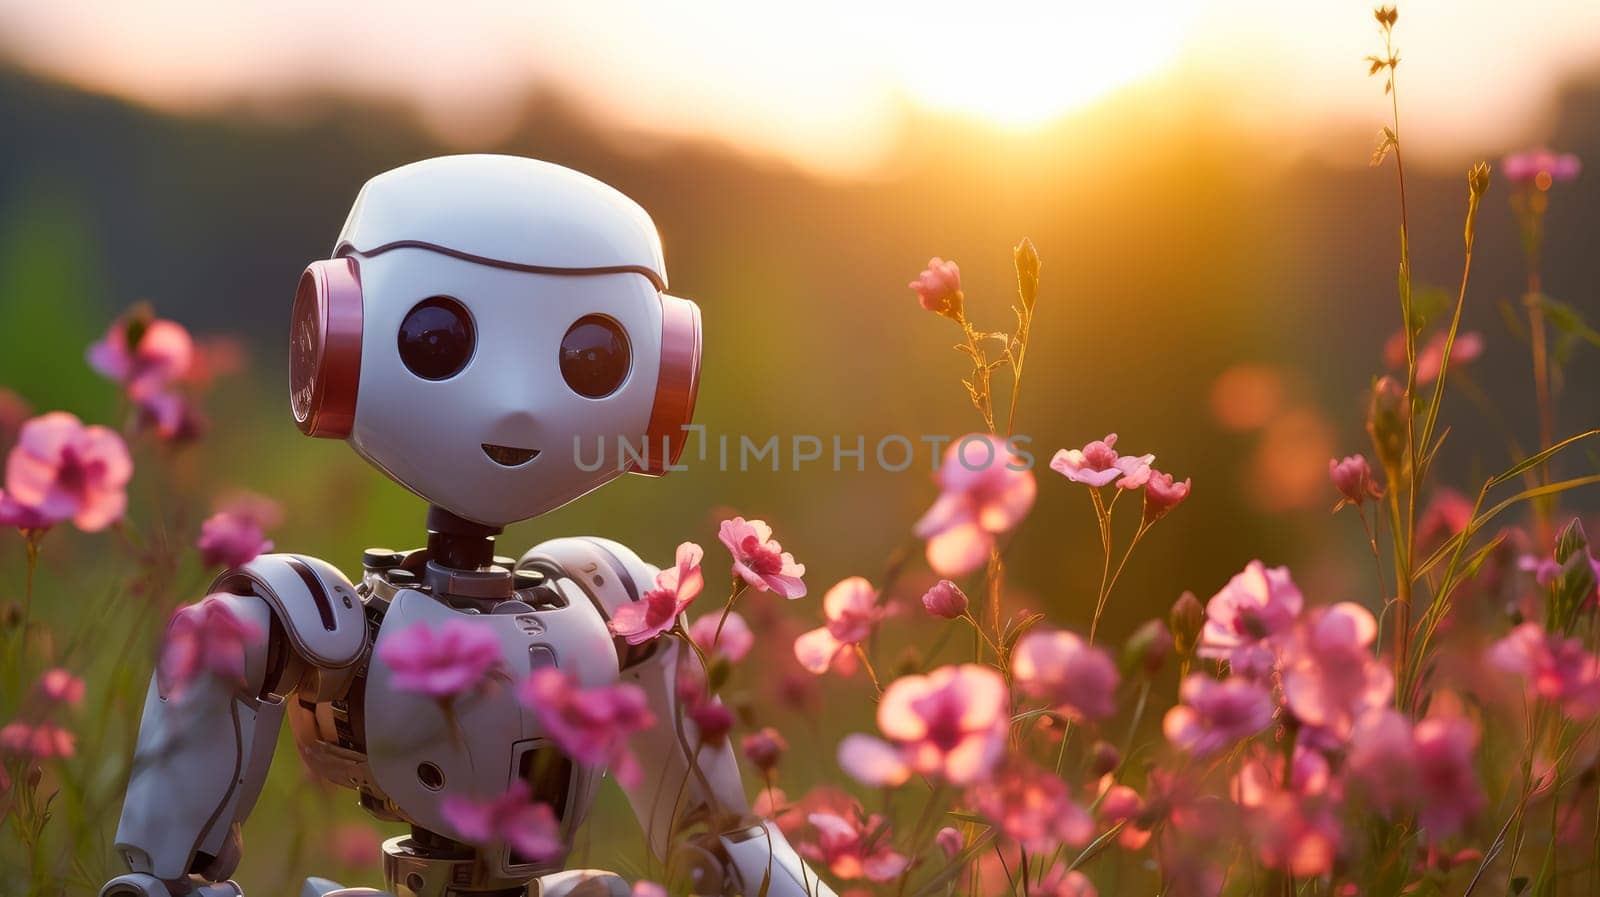 robot ai chatbot in nature by Alla_Yurtayeva